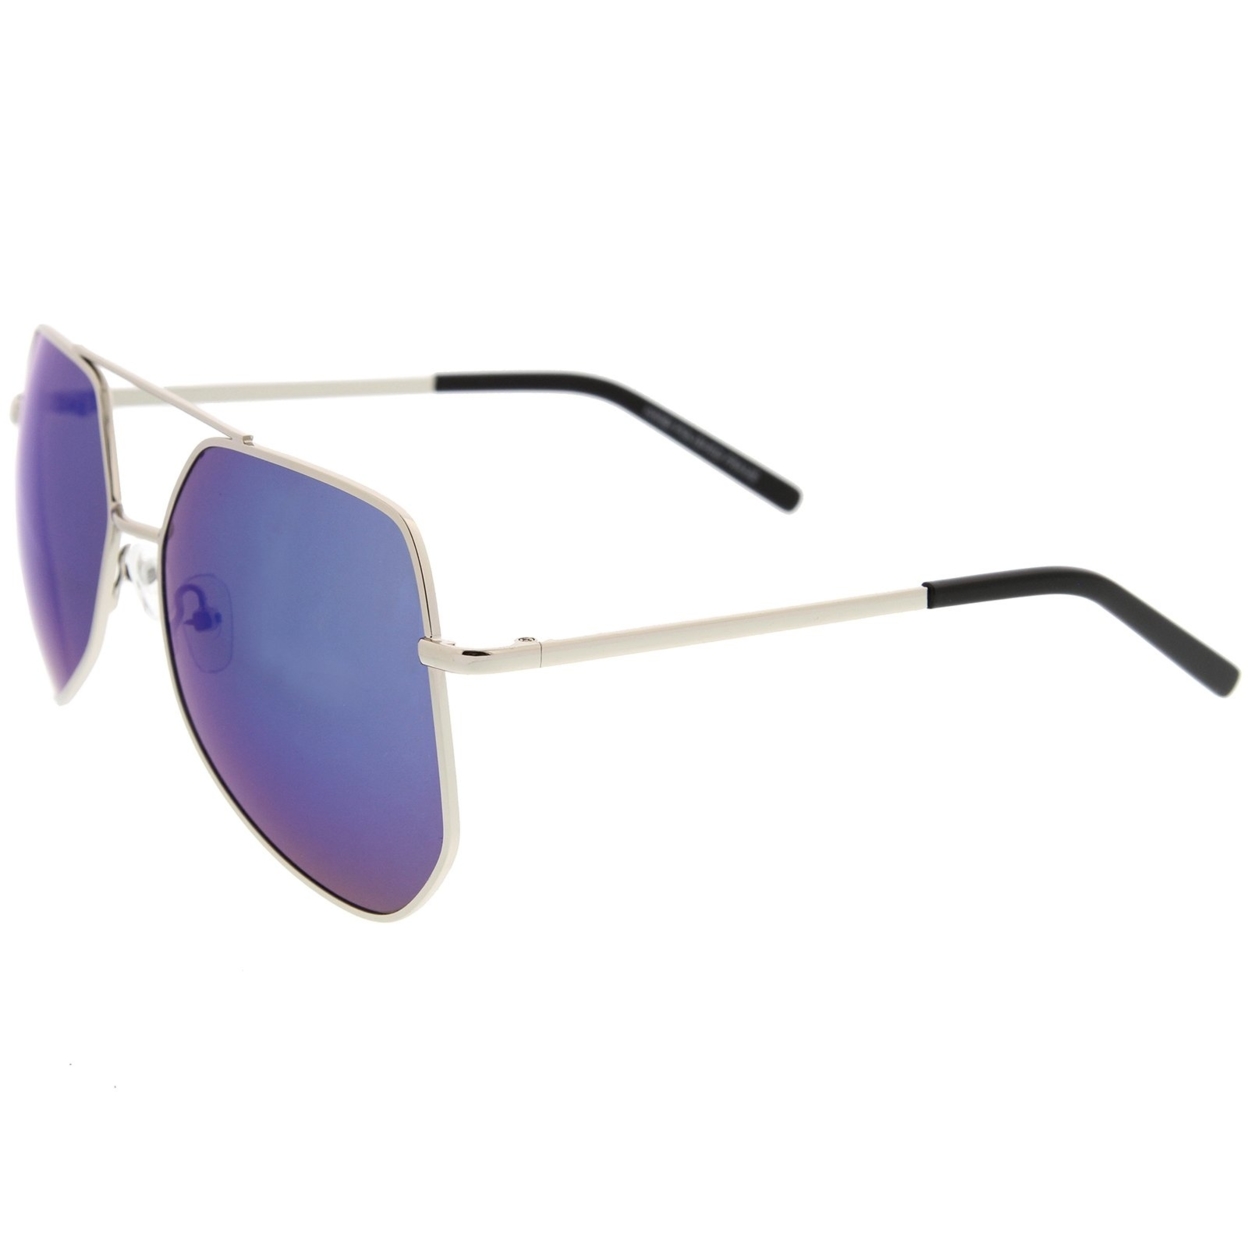 Modern Hexagonal Geometric Metal Crossbar Mirror Lens Aviator Sunglasses 60mm - Silver / Pink